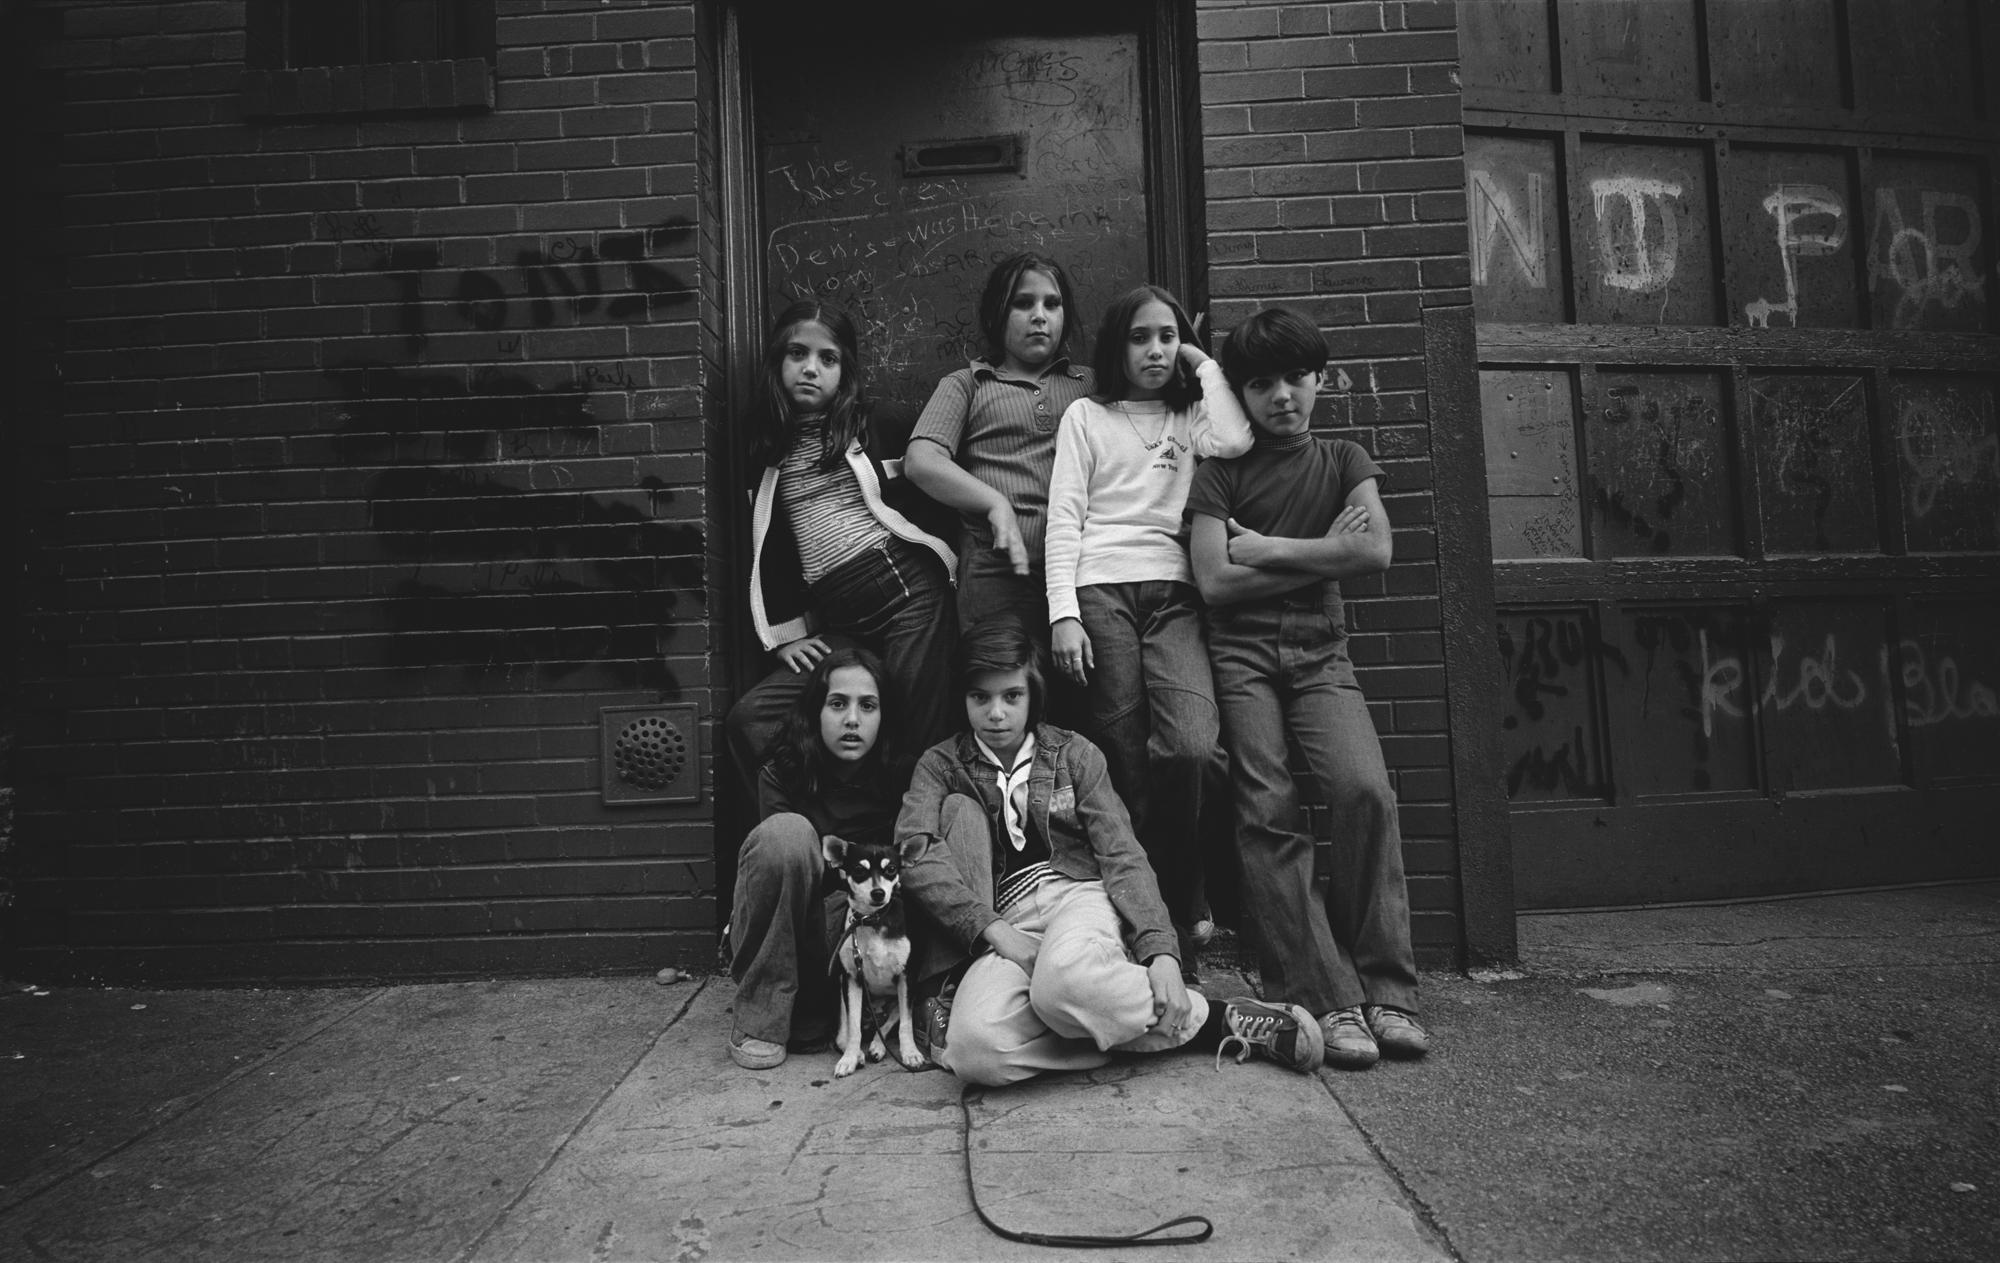 Prince Street Girls - Frankie and the Prince Street Girls, 1975